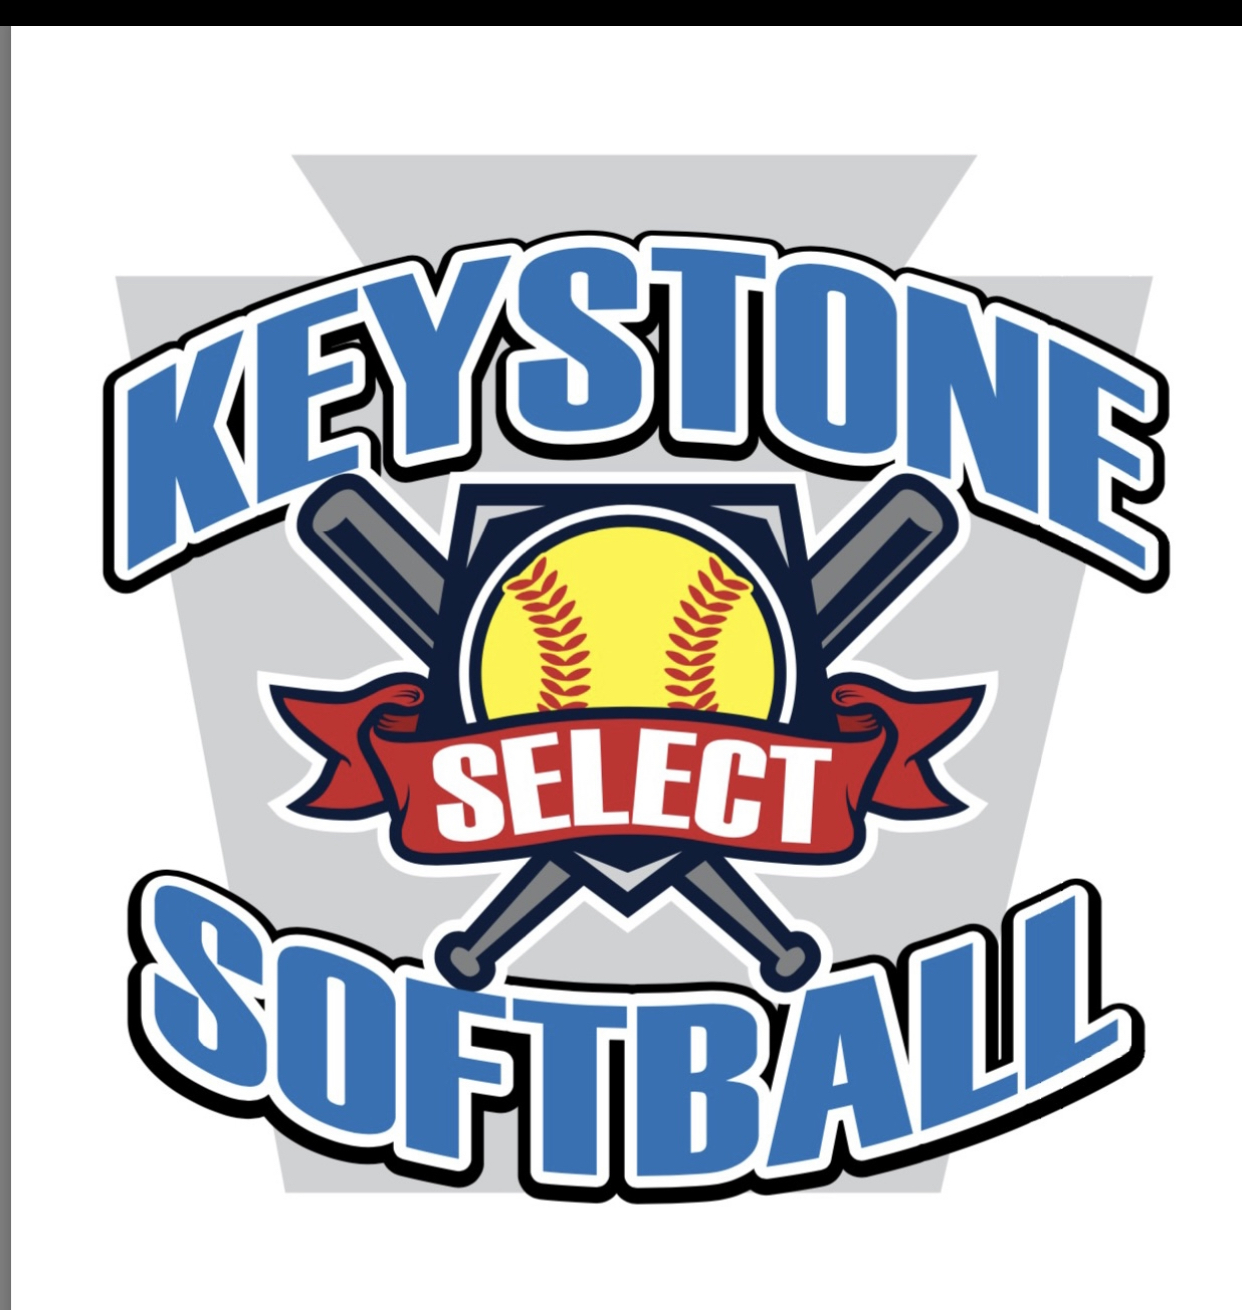 Keystone Select Softball Camp Victory Tournament Drums Logo